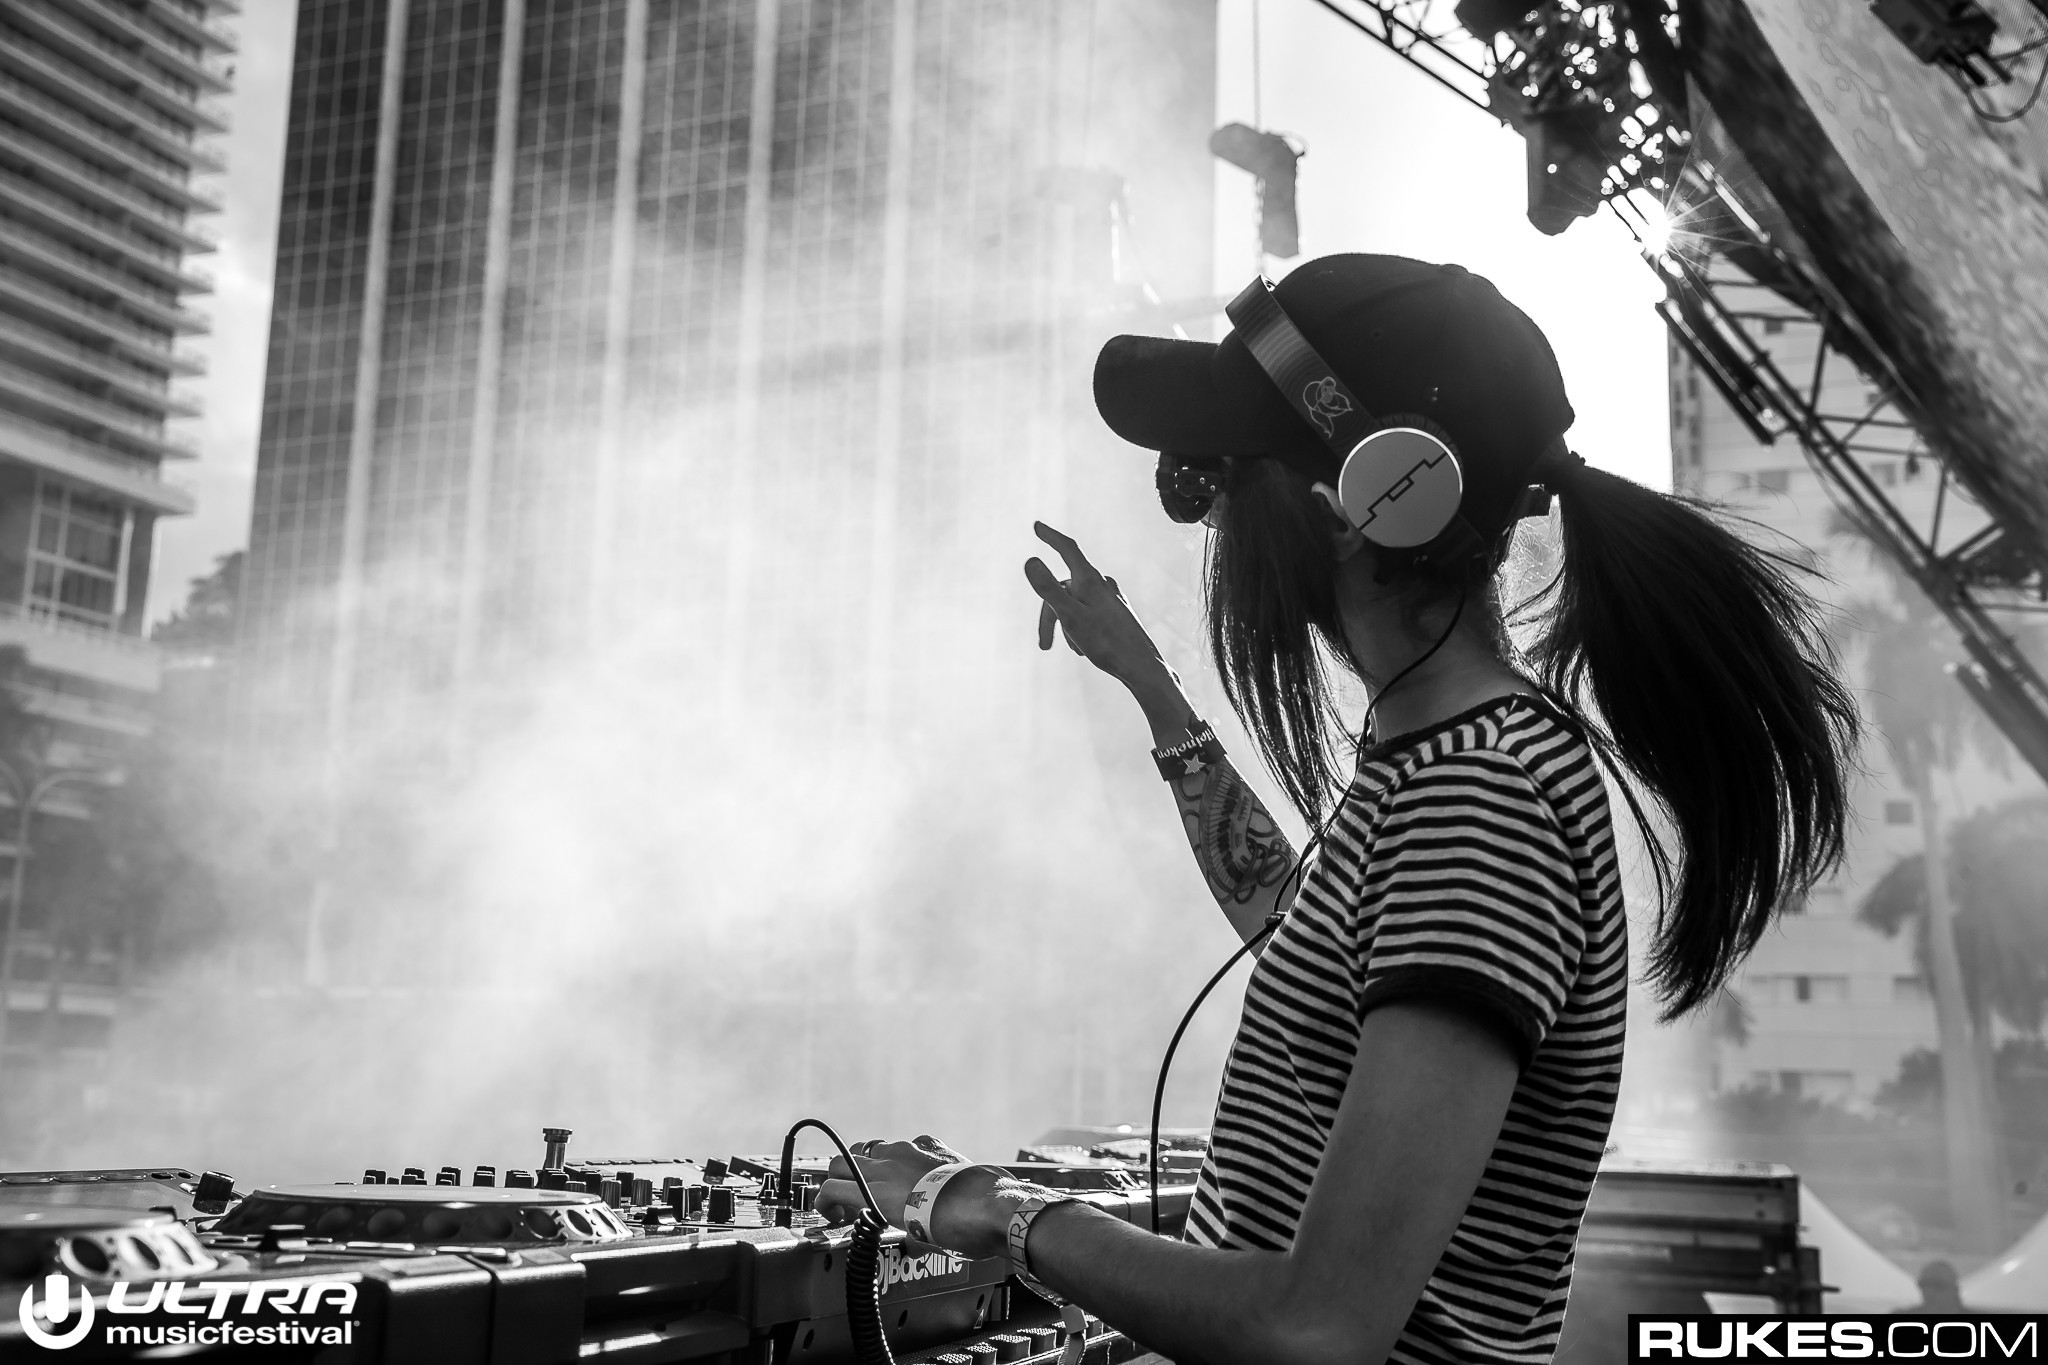 People 2048x1365 Ultra Music Festival Rukes Rezz ponytail DJ headphones mixing consoles monochrome smoke photography stripes women